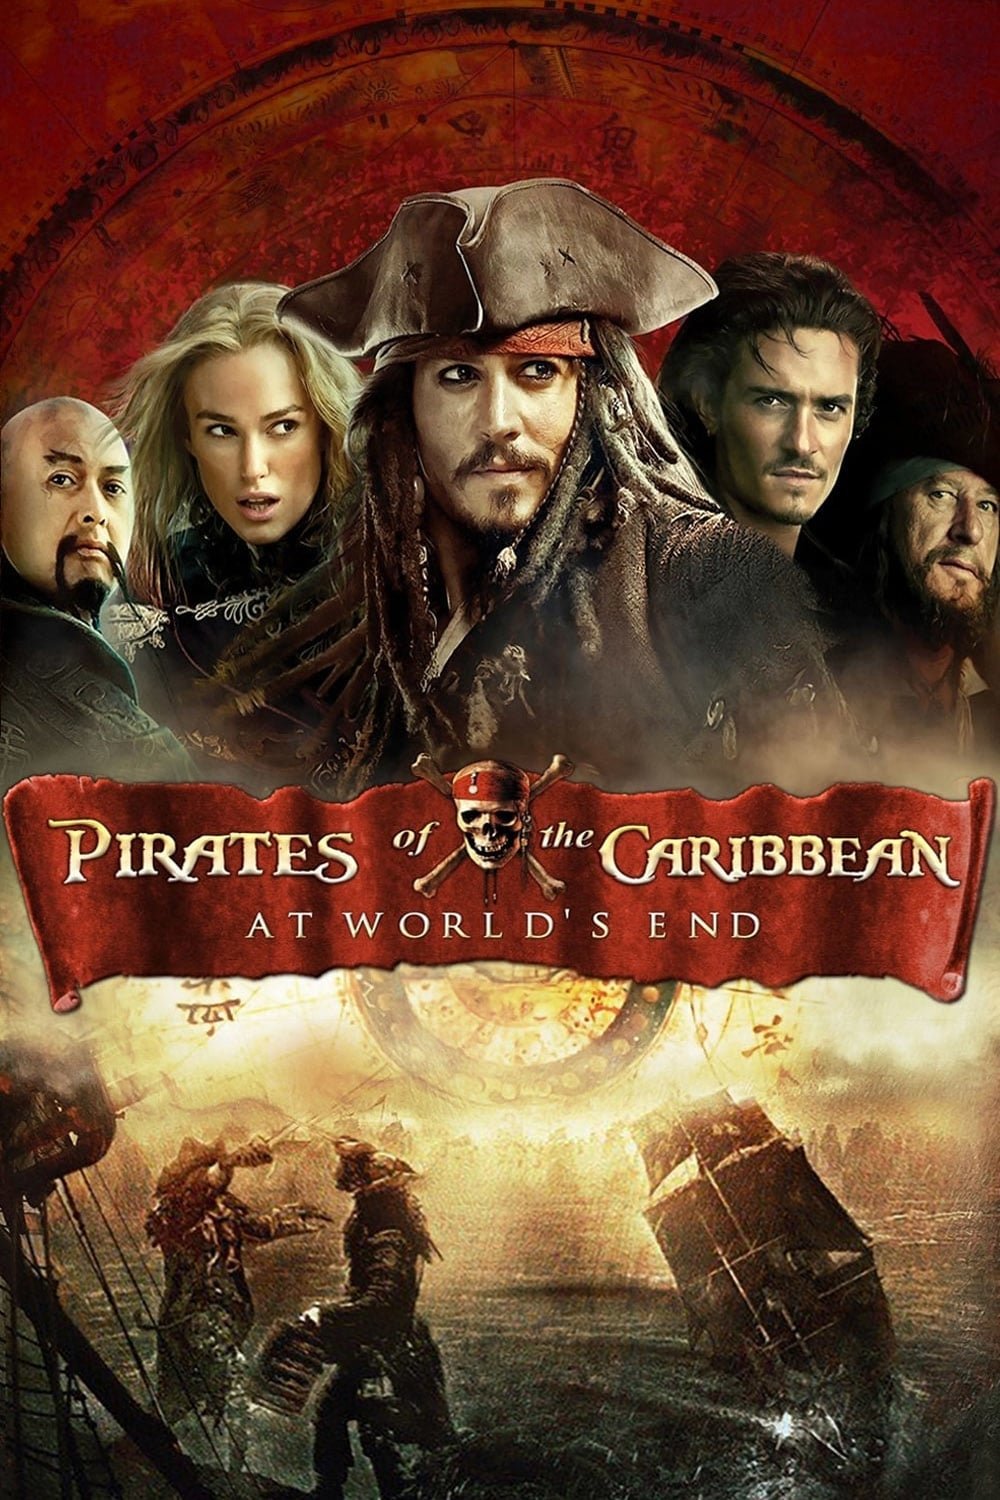 Pirates 2005 full movie online free download